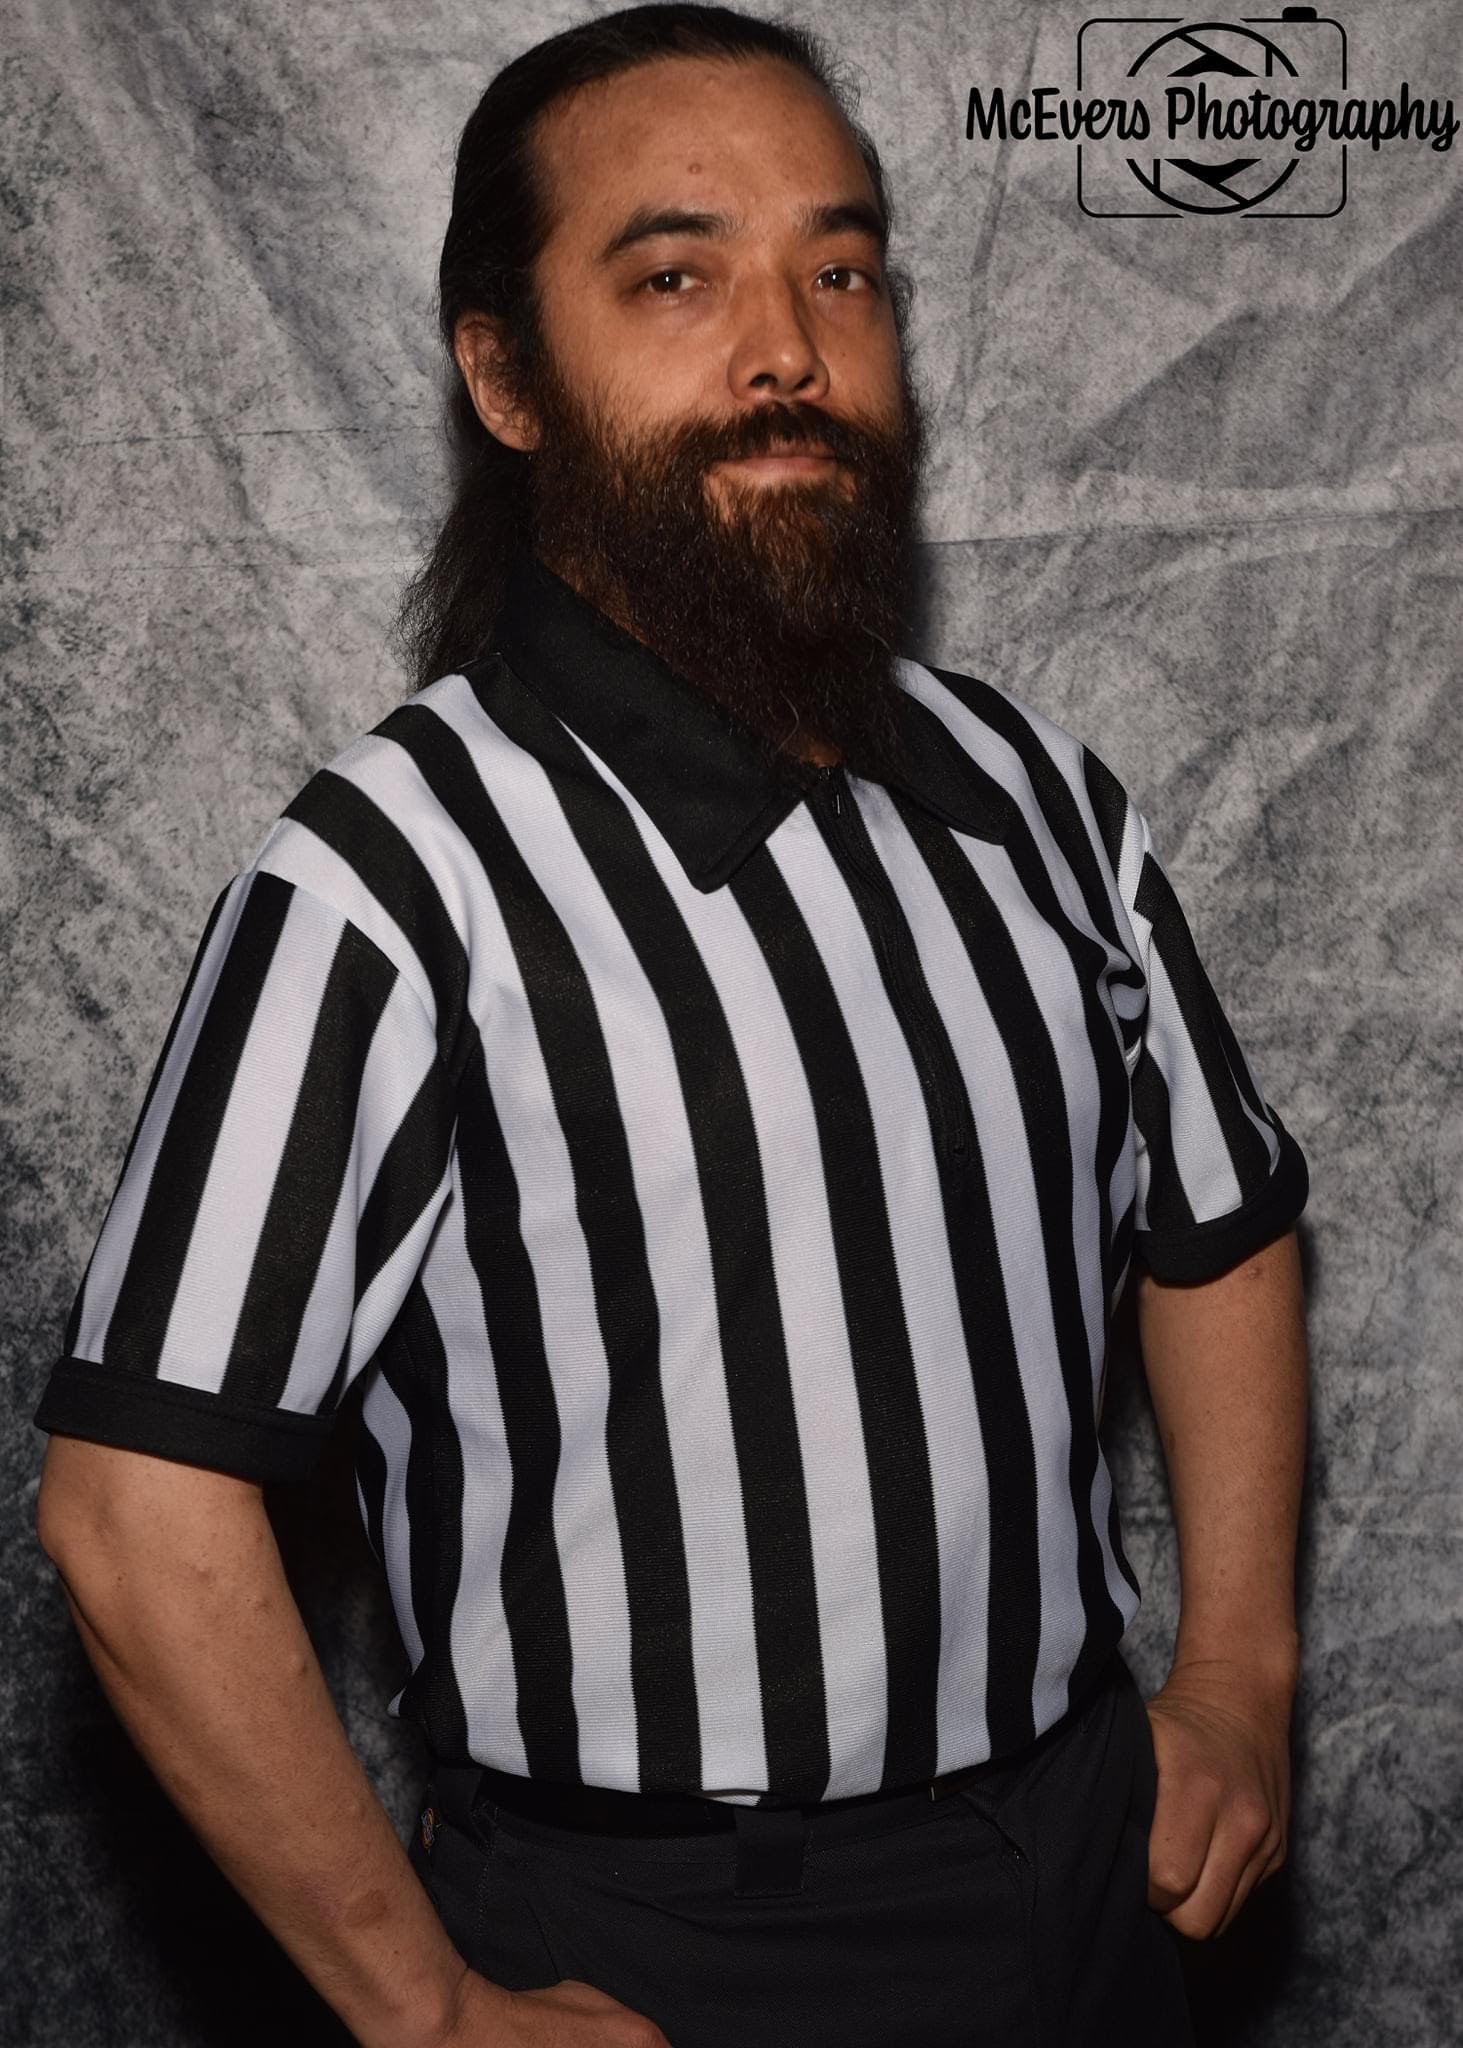 Dan Tanaka Professional Wrestling Referee